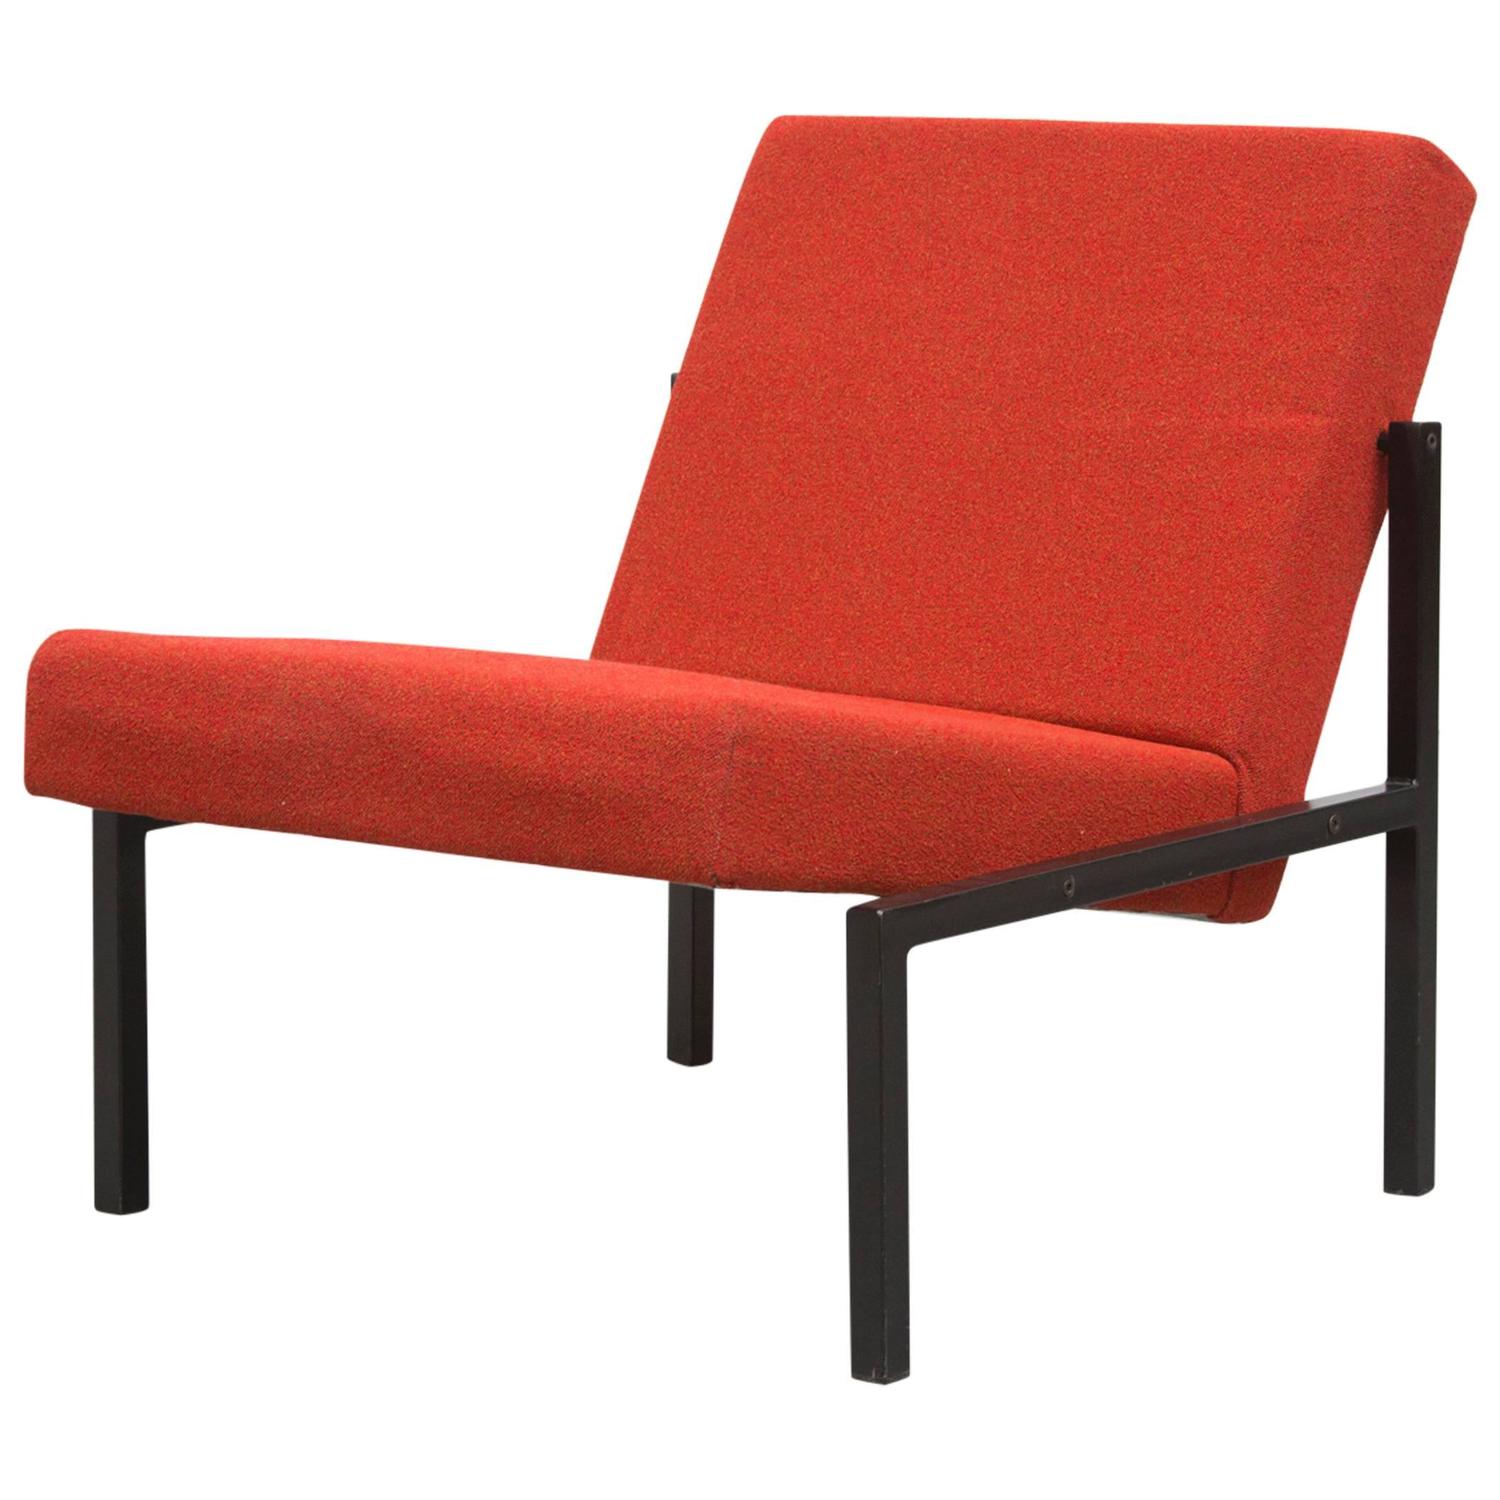 Martin Visser Armless Lounge Chair at 1stdibs